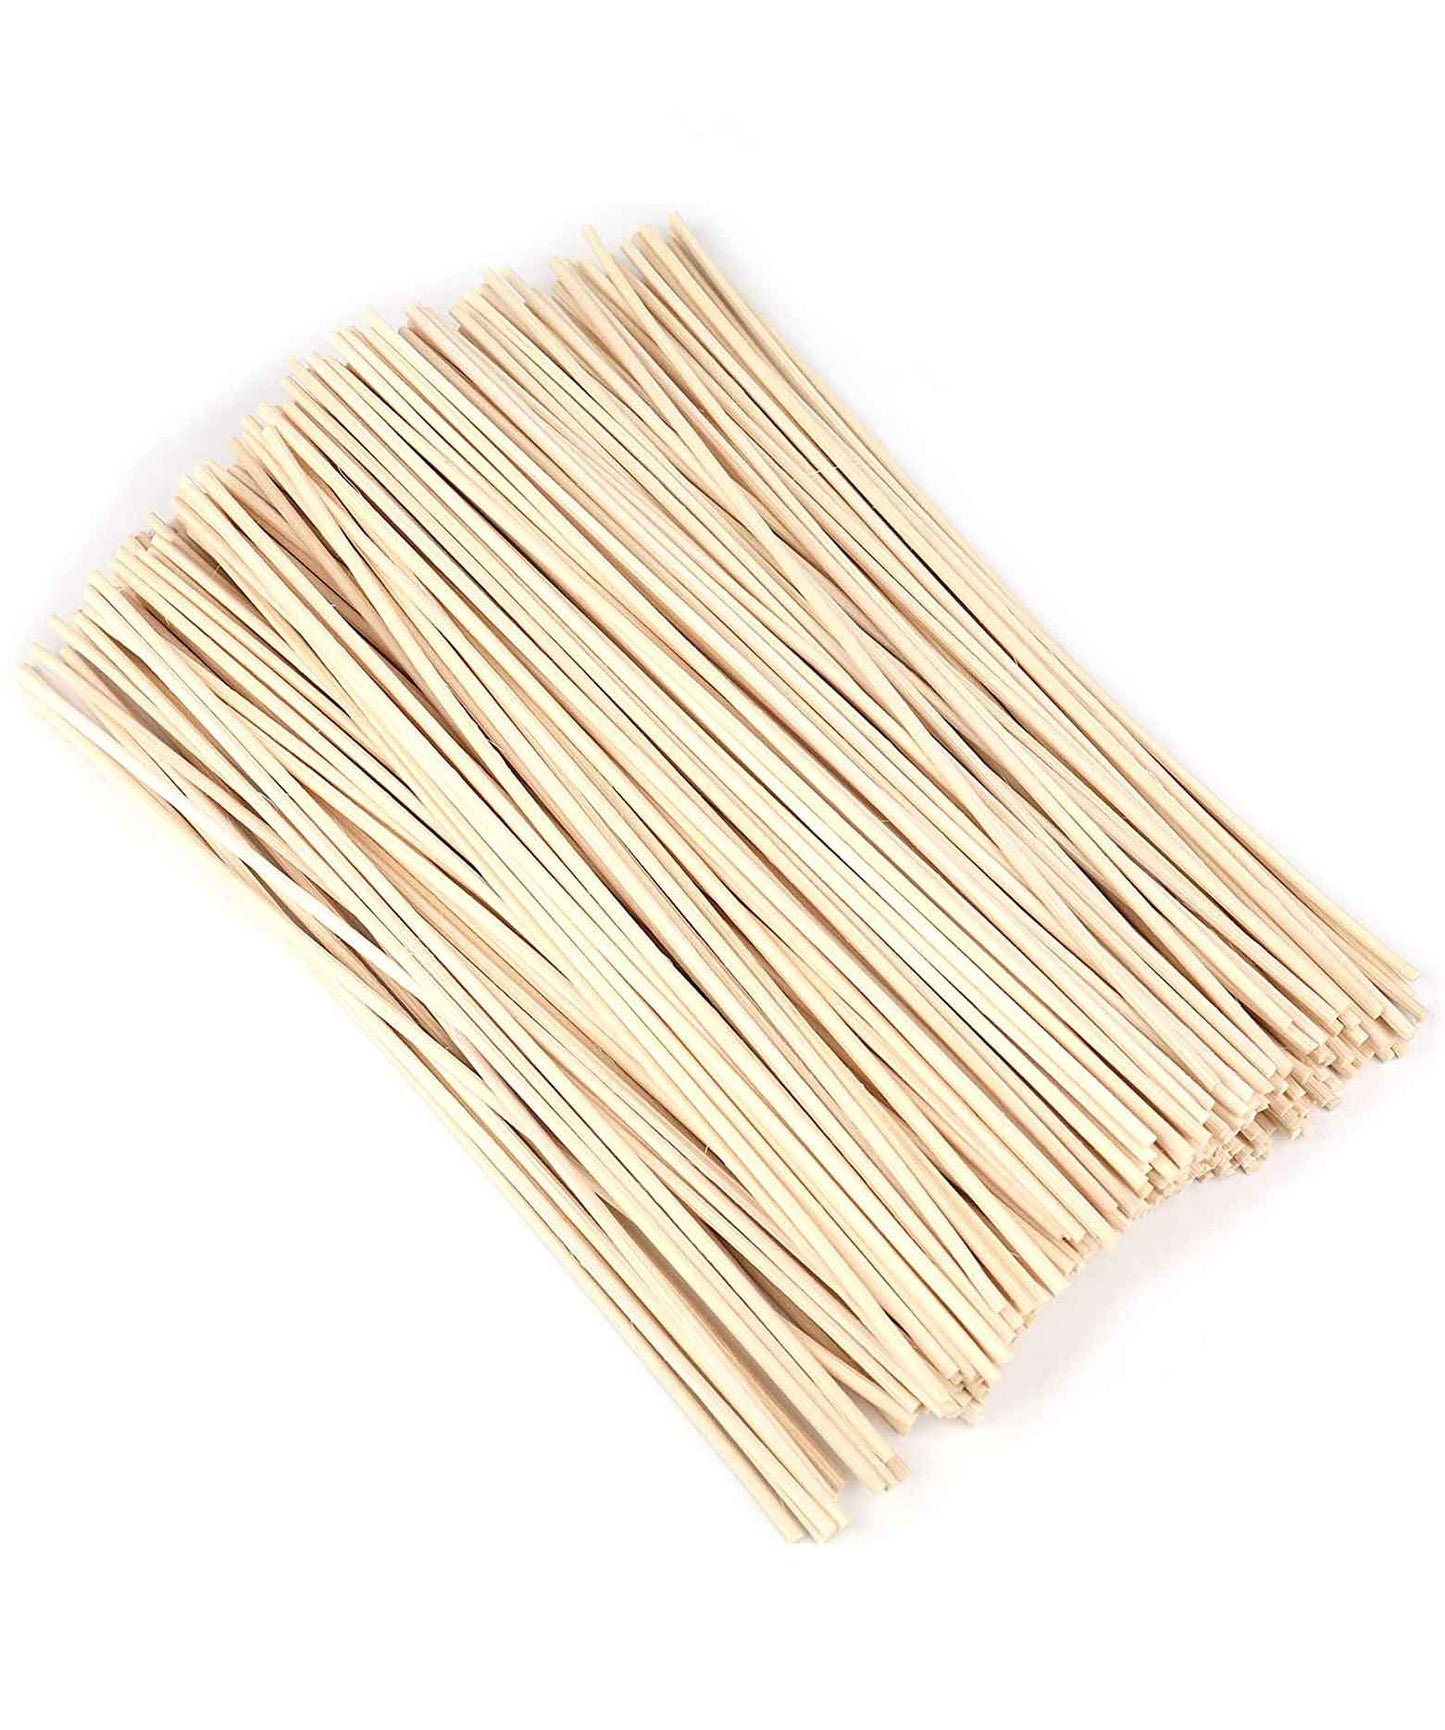 Rattan Reed Sticks For Aroma Oil Diffuser 100 Sticks